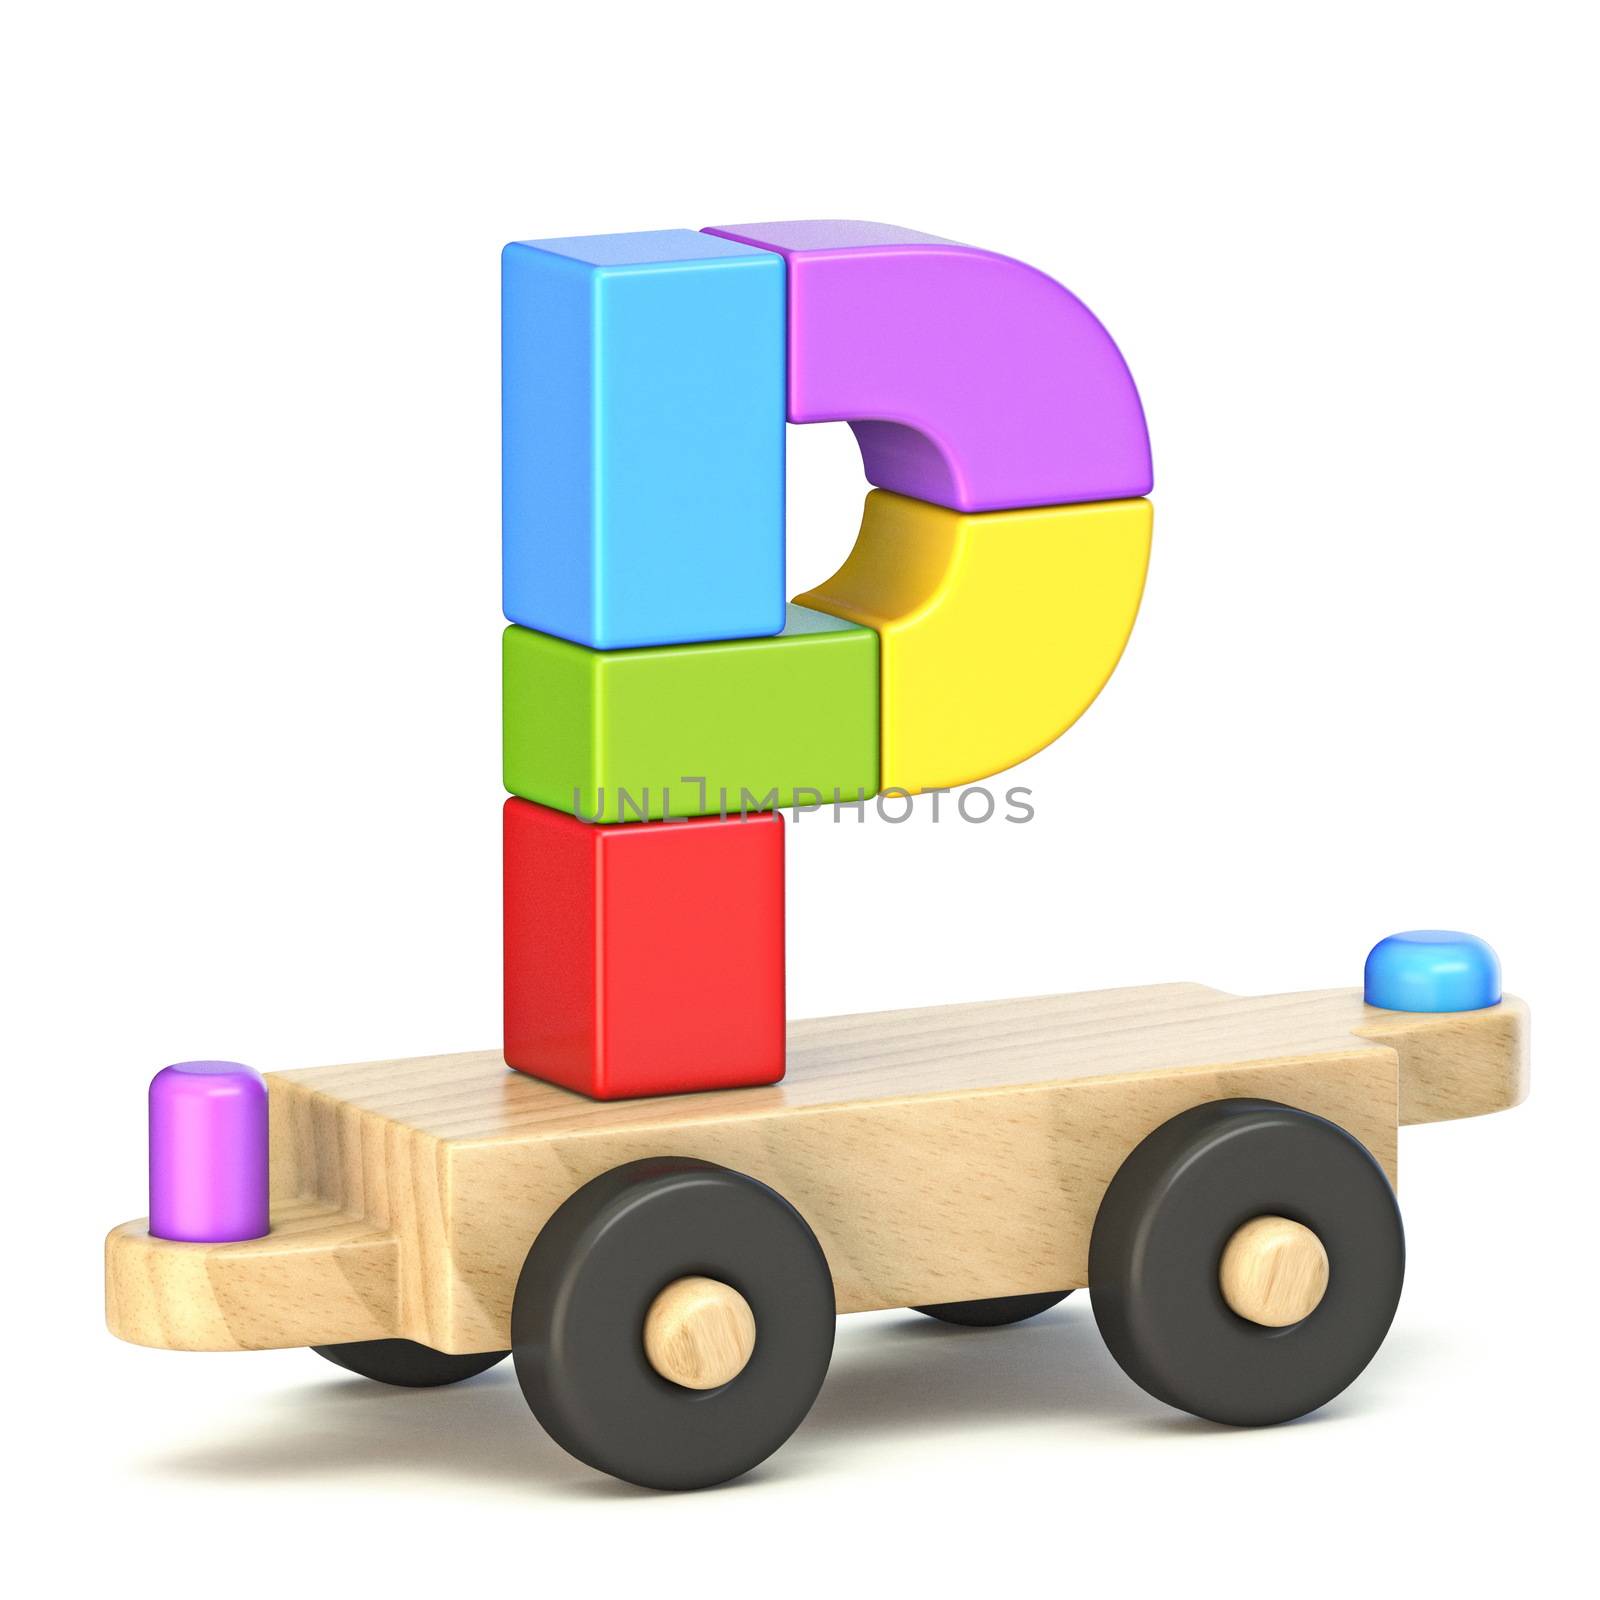 Wooden train font Letter P 3D render illustration isolated on white background